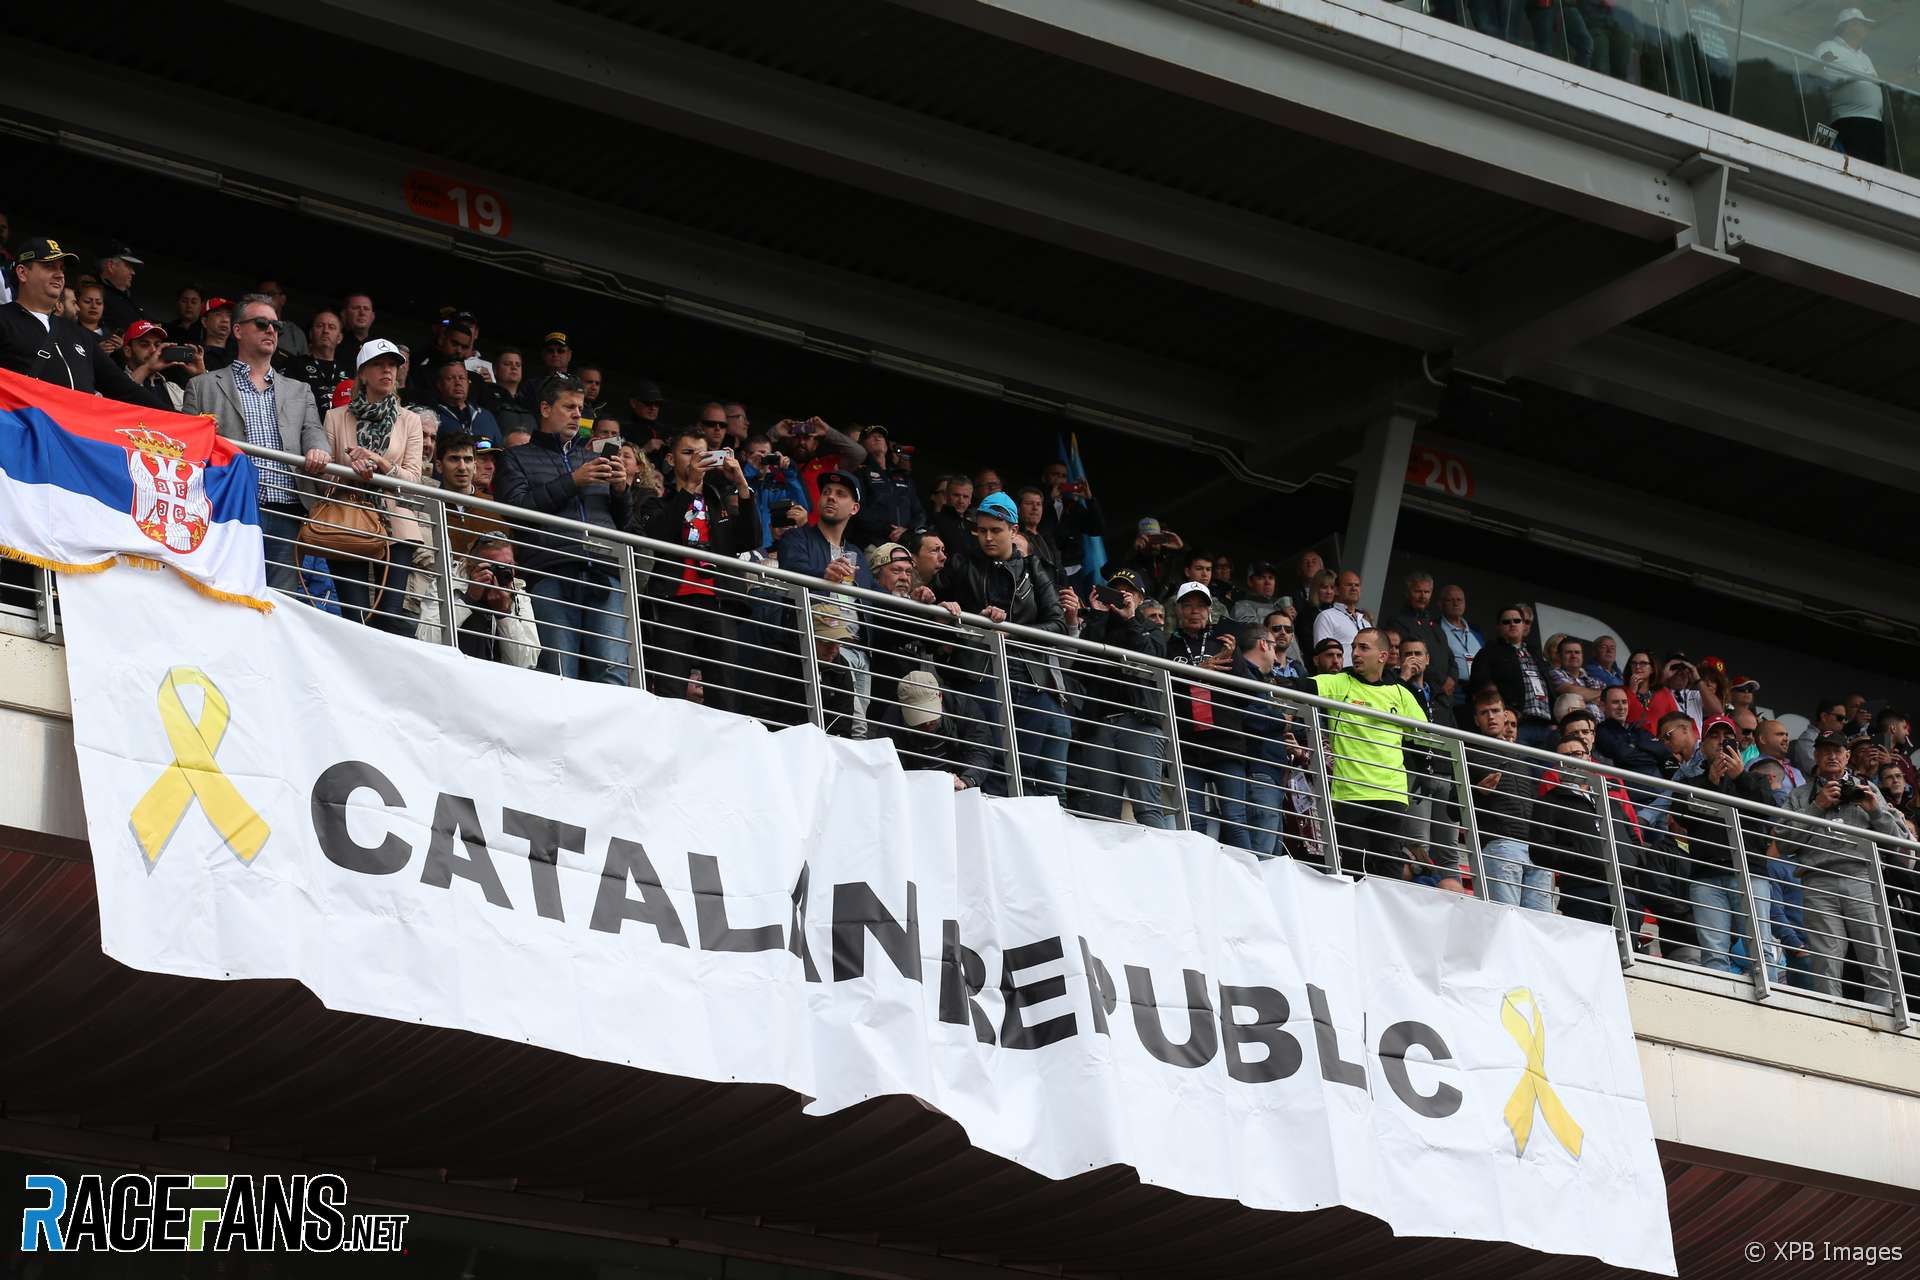 Catalan Republic banner at the Circuit de Catalunya, 2018